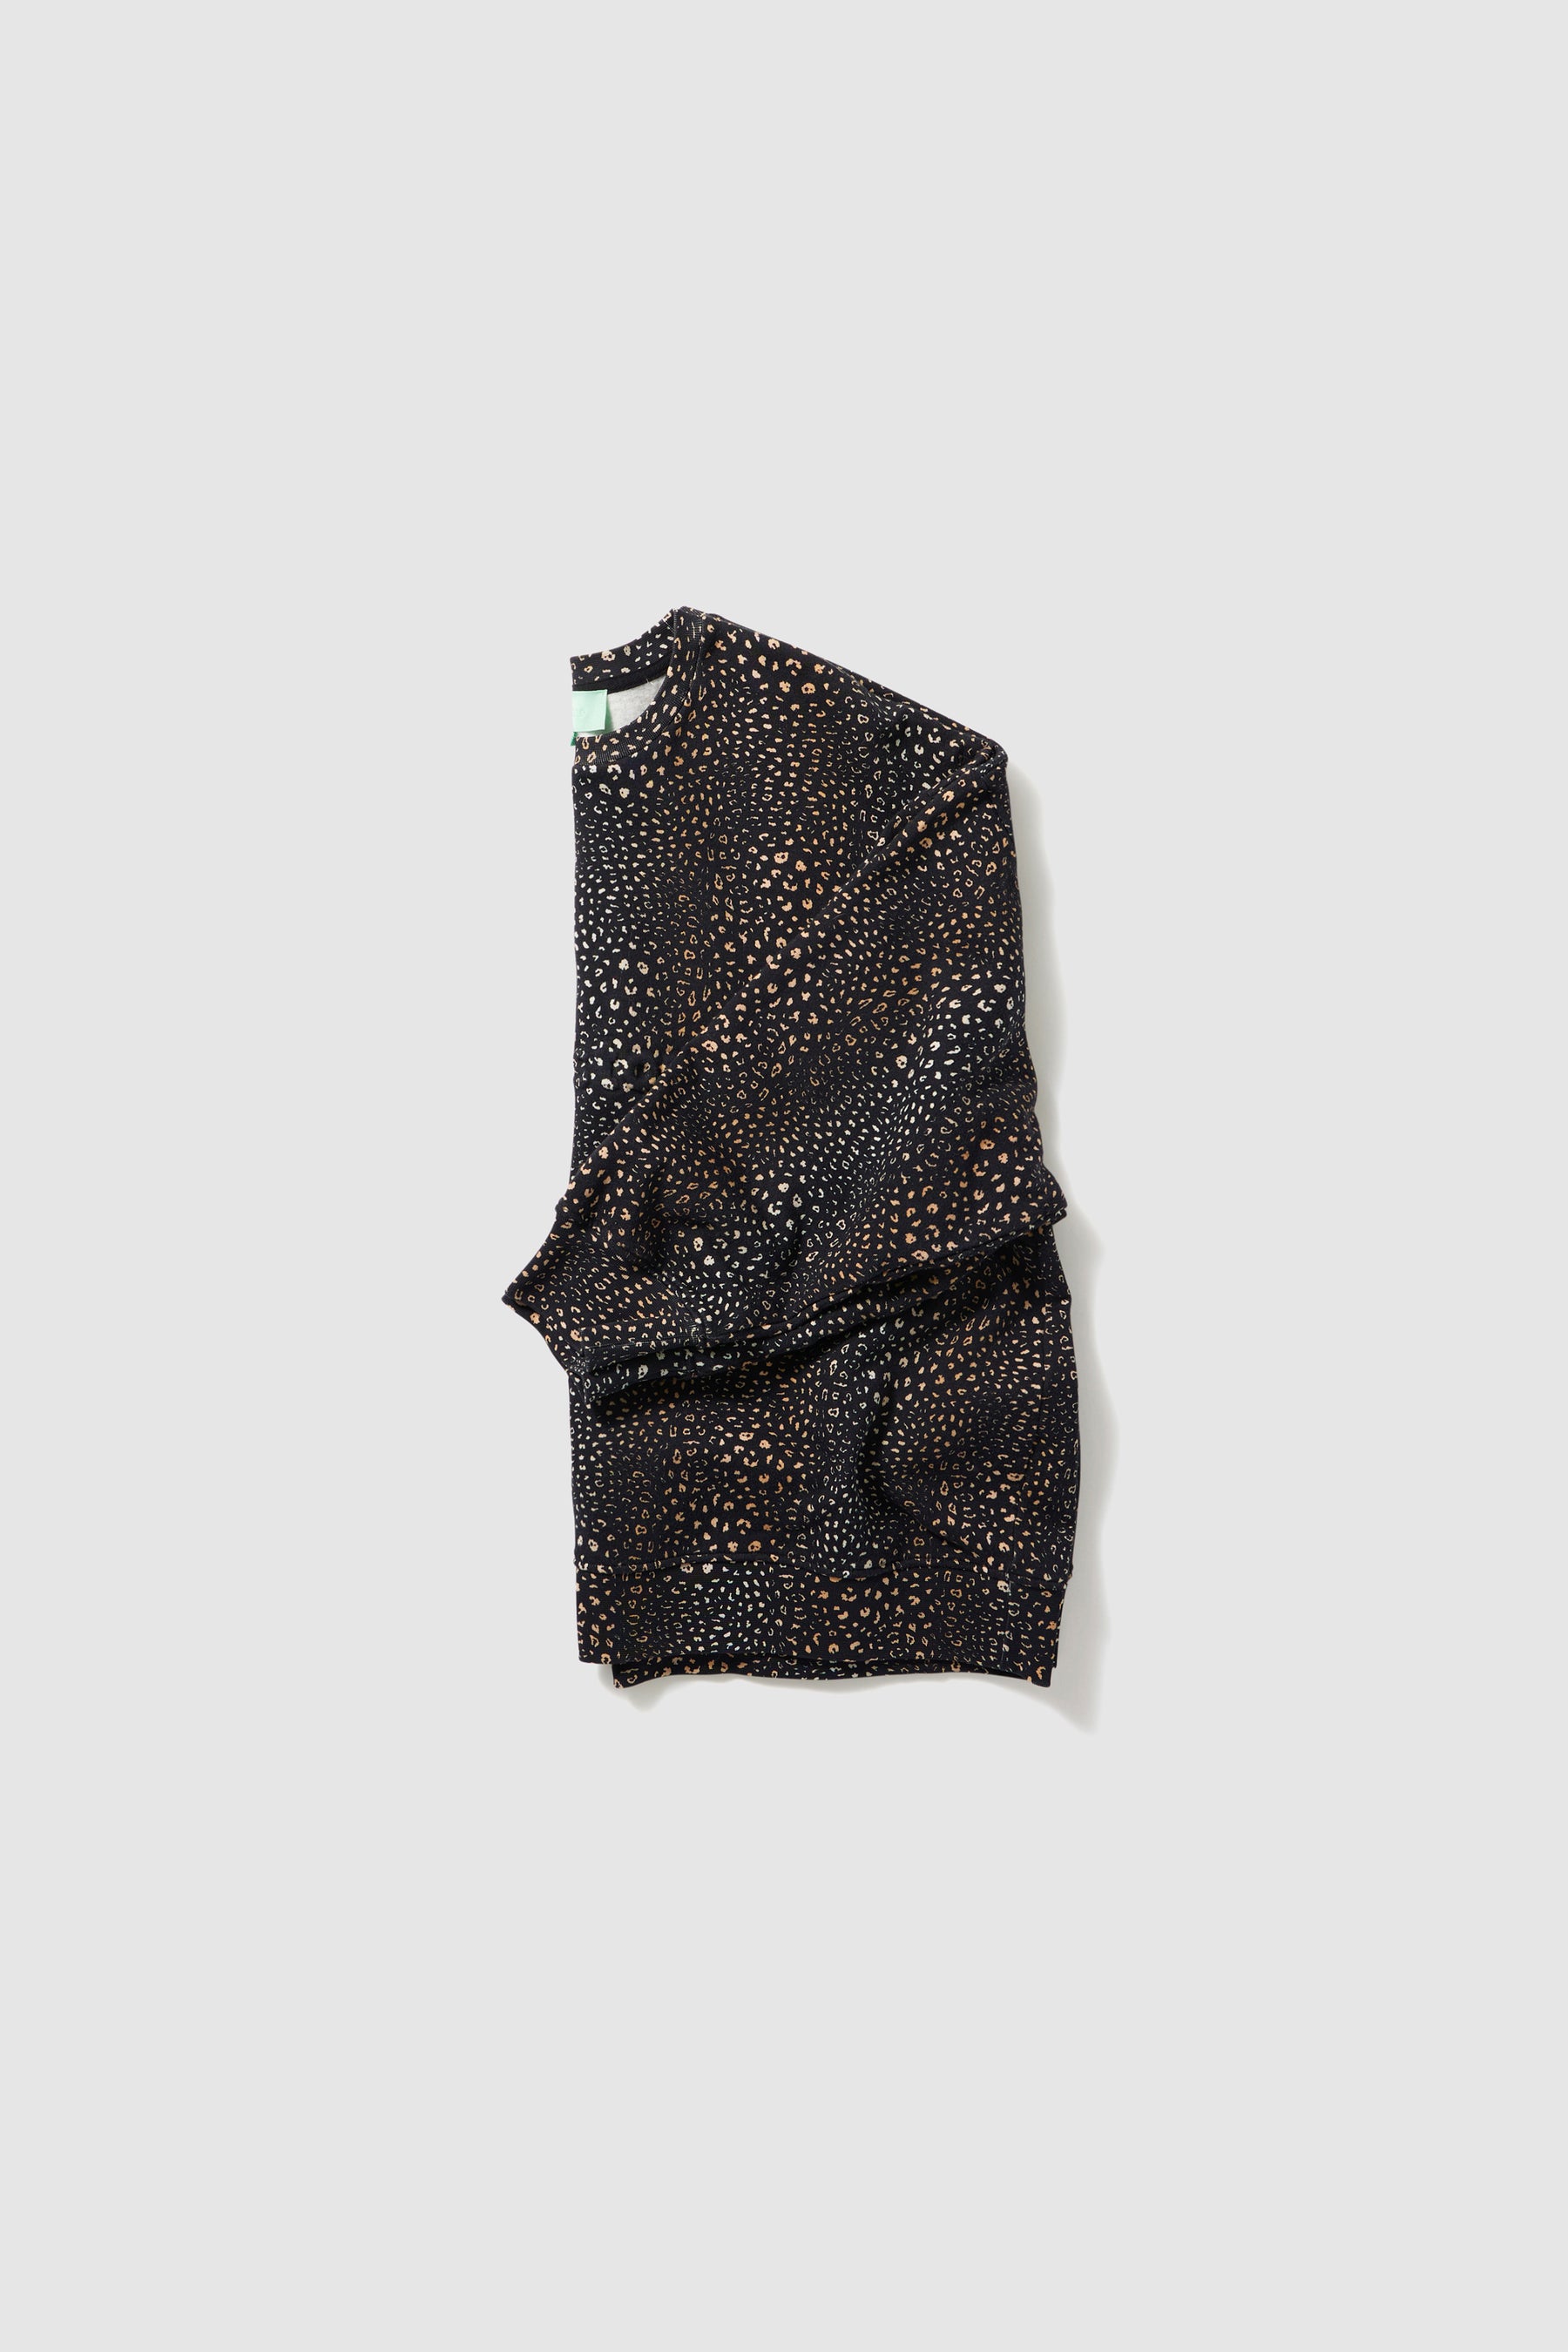 Harlem Jumper in black Leopard printed fleece